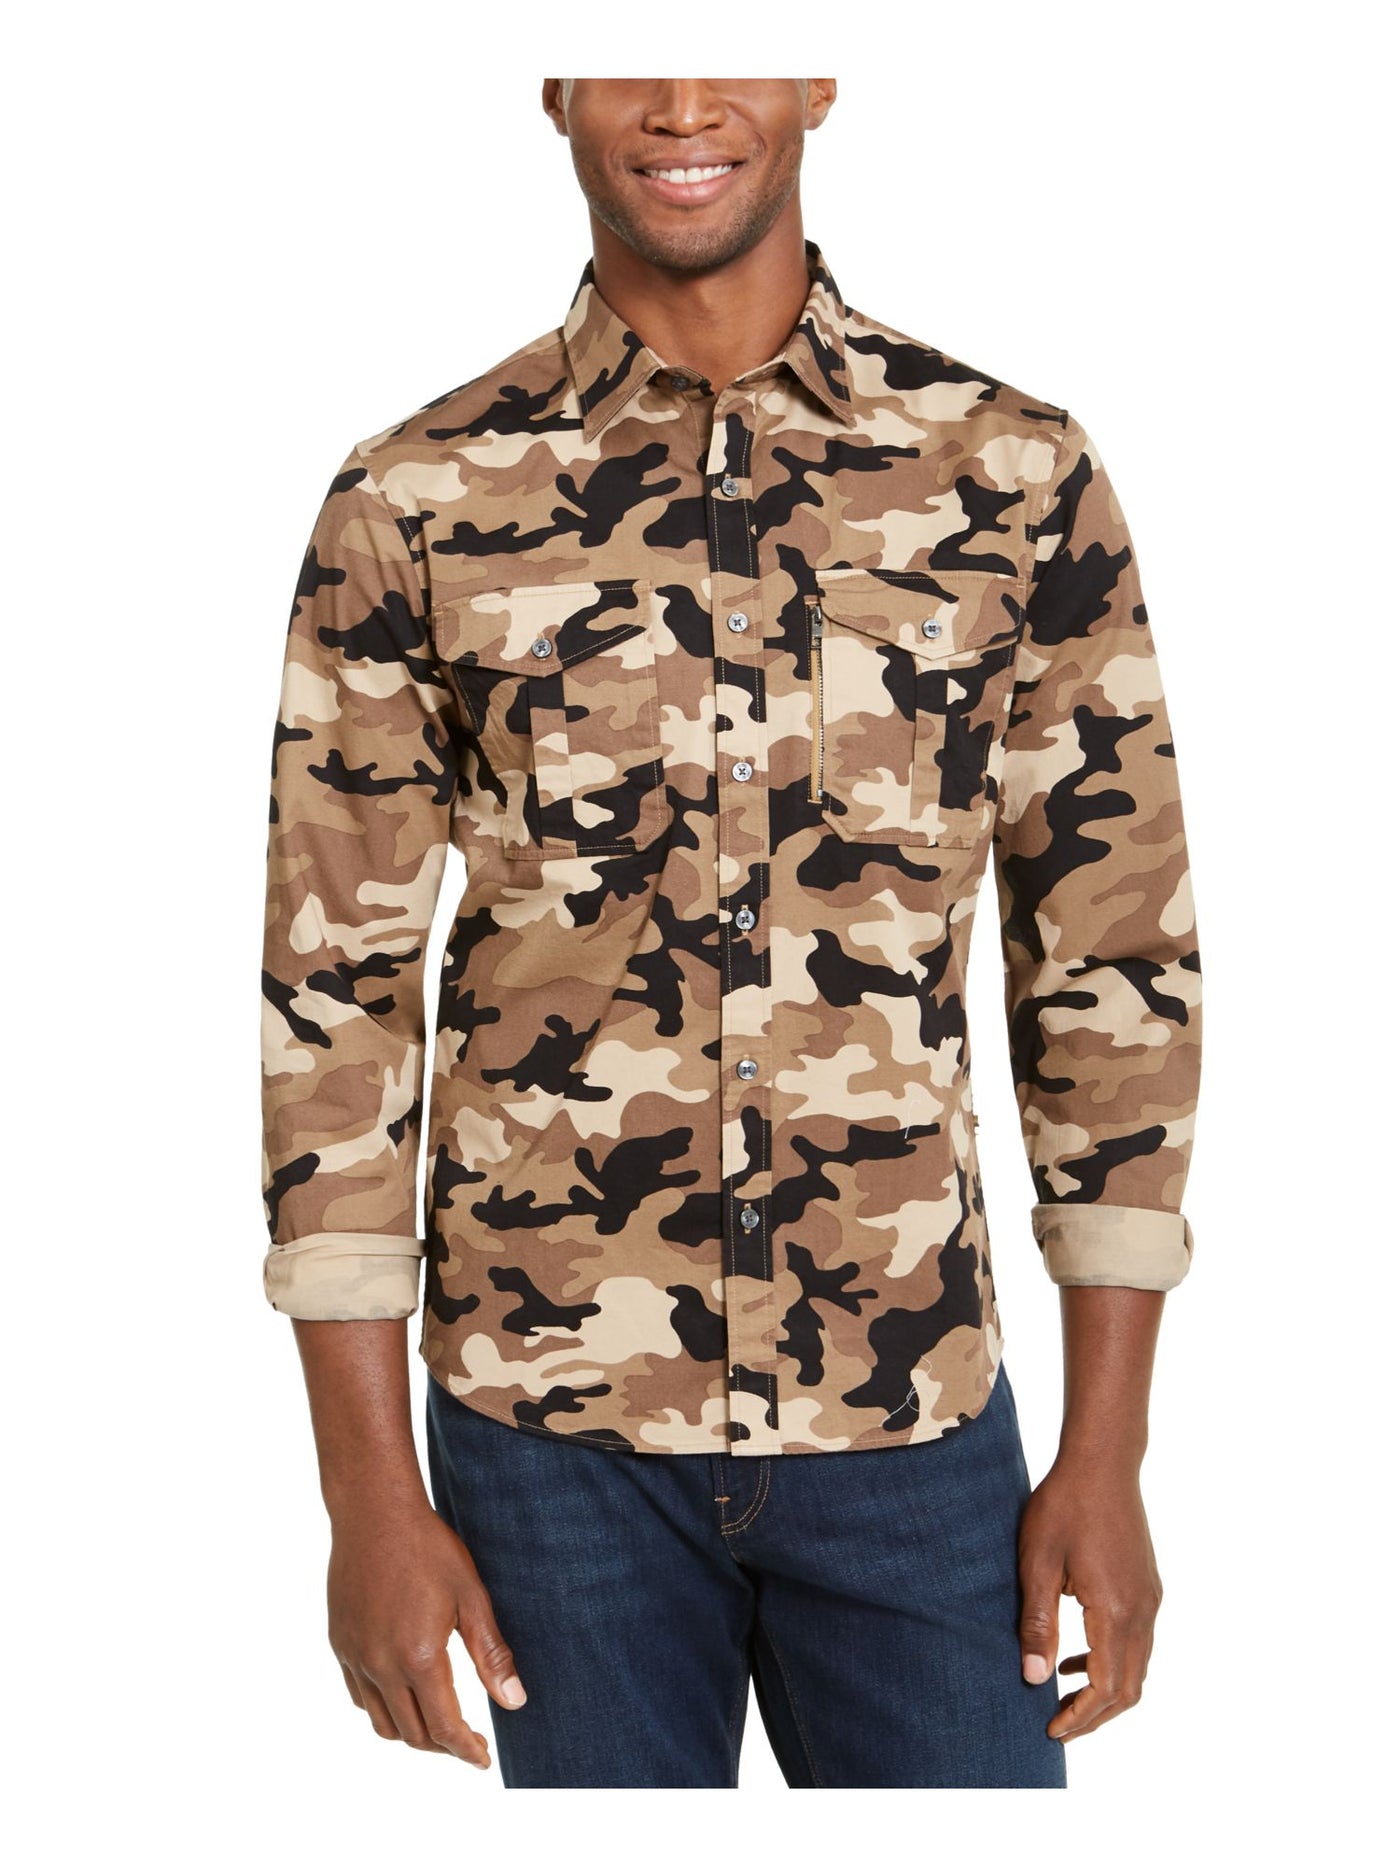 MICHAEL KORS Mens Beige Camouflage Slim Fit Button Down Cotton Casual Shirt S